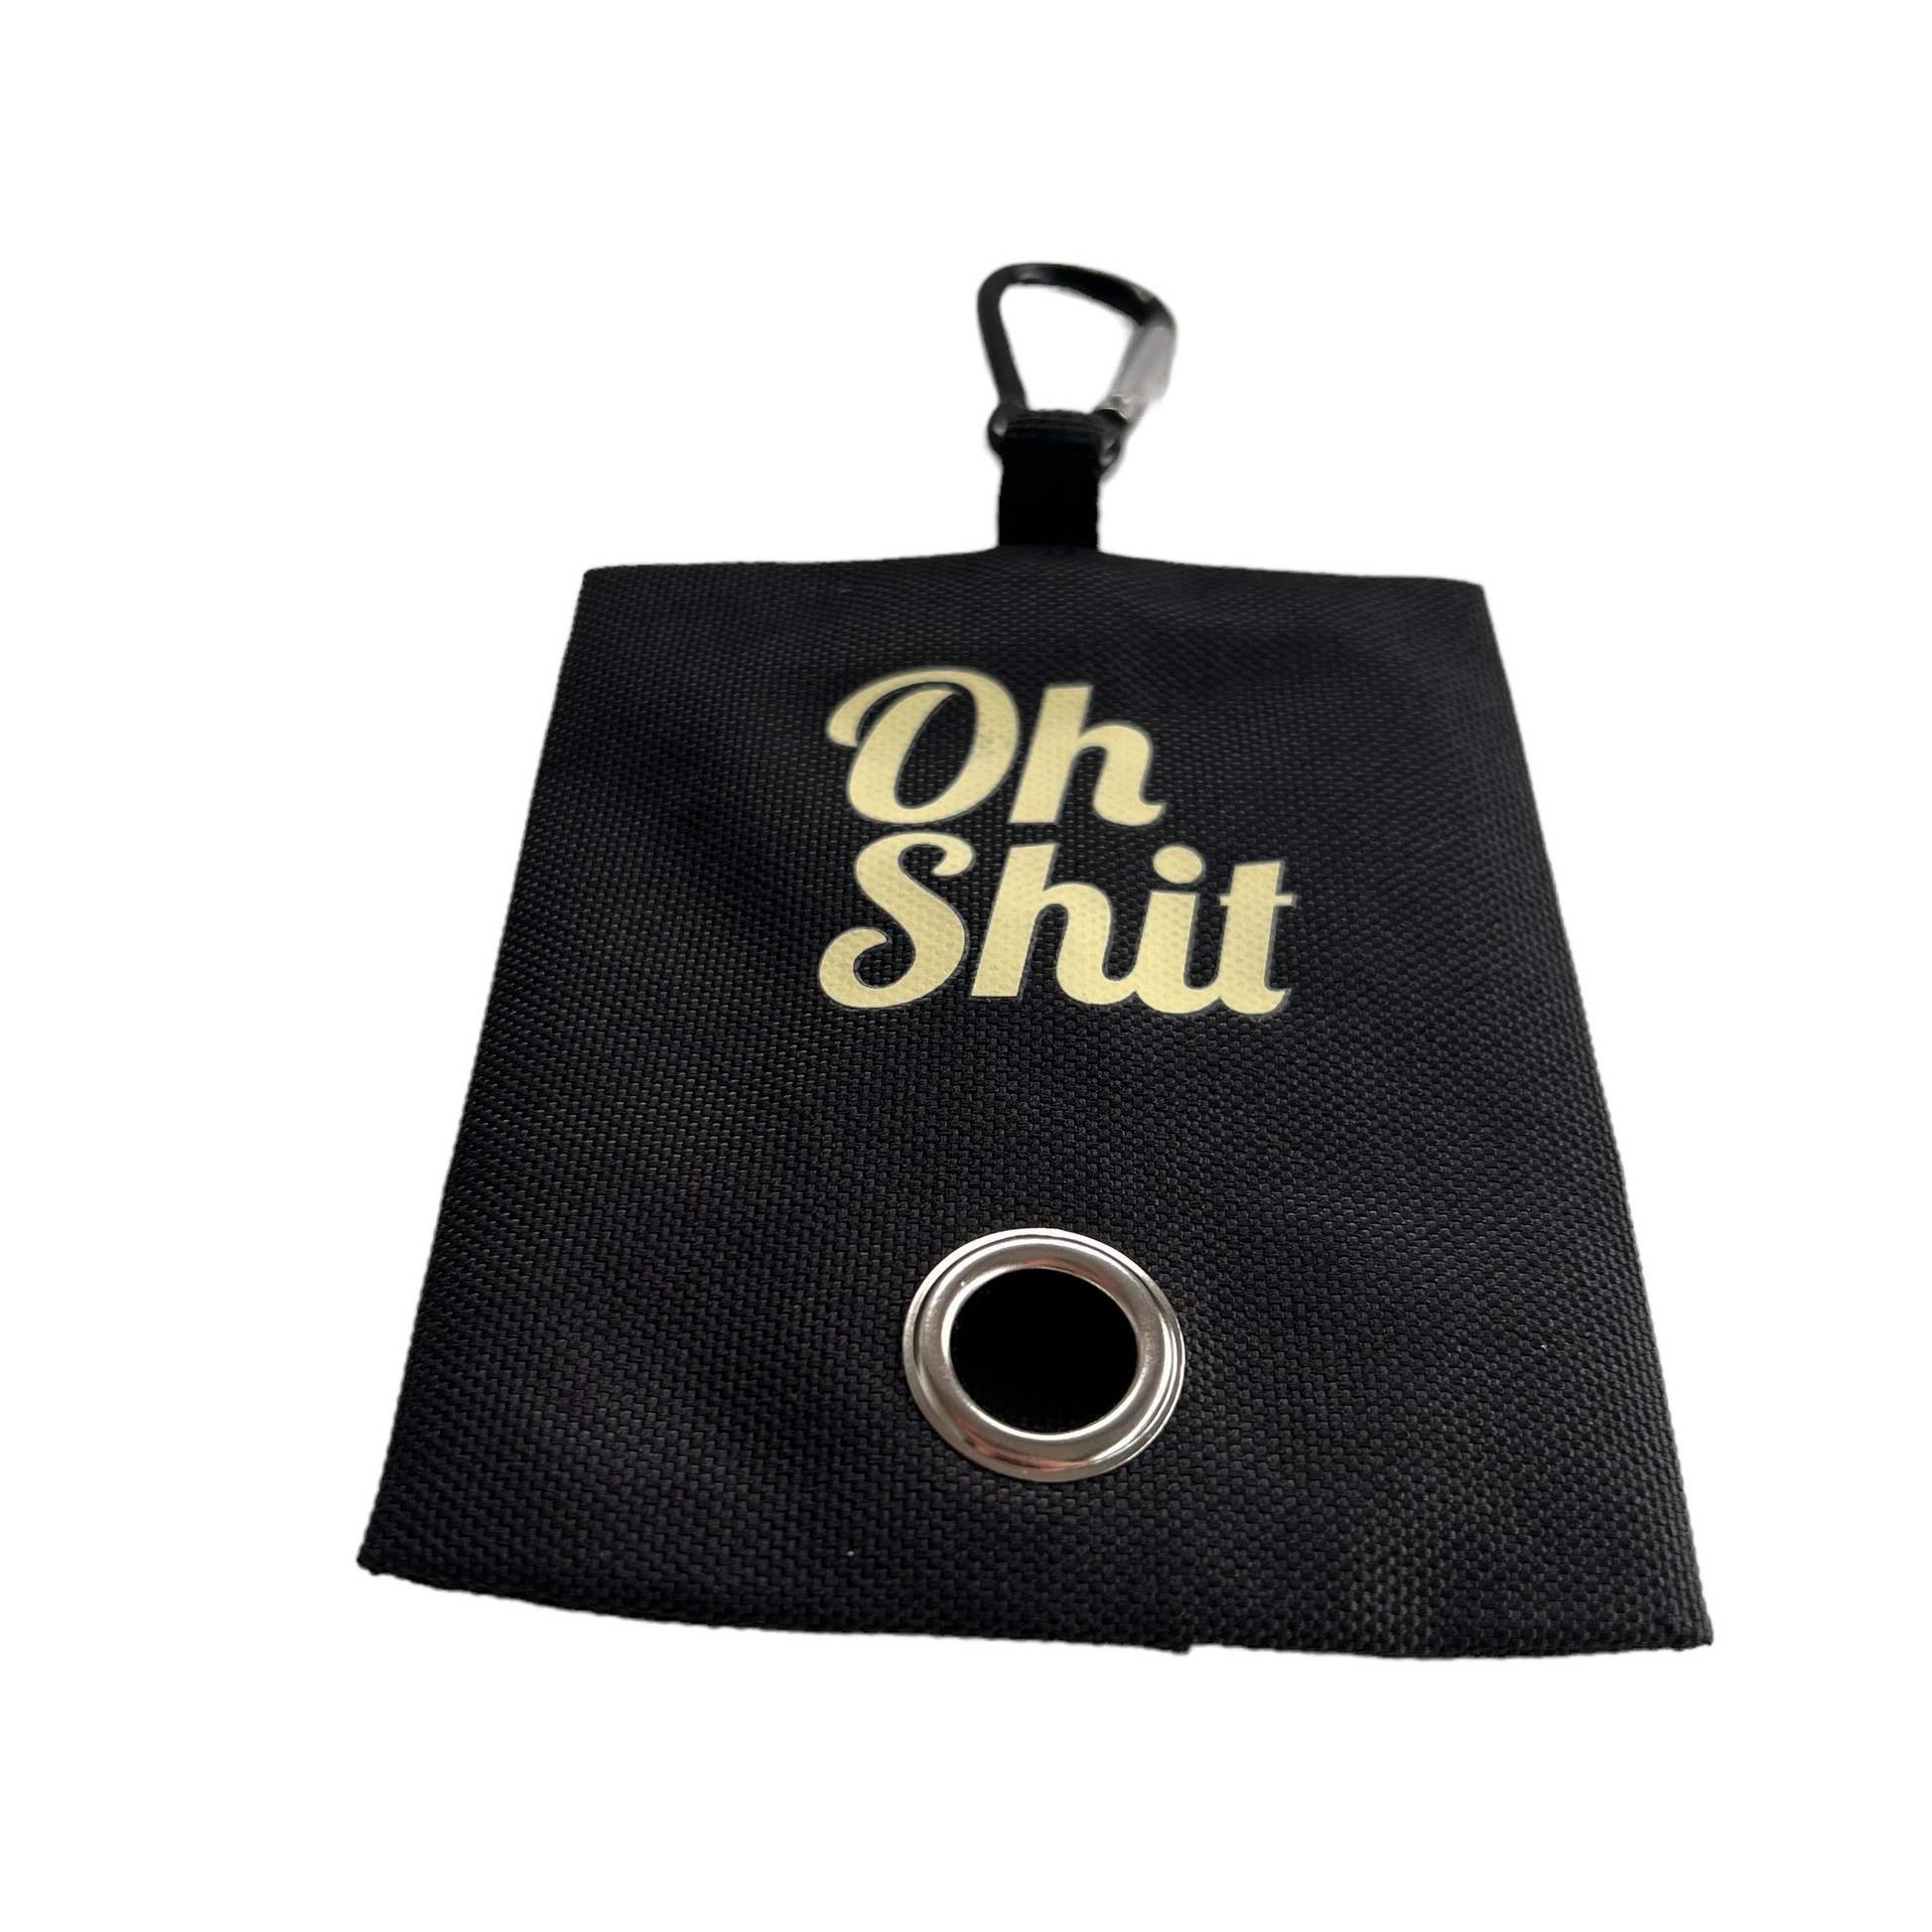 “Oh Sh*t” Rubbish Bag Dispenser Pet Waste Bag Dispensers & Holders SPIRIT SPARKPLUGS Black  